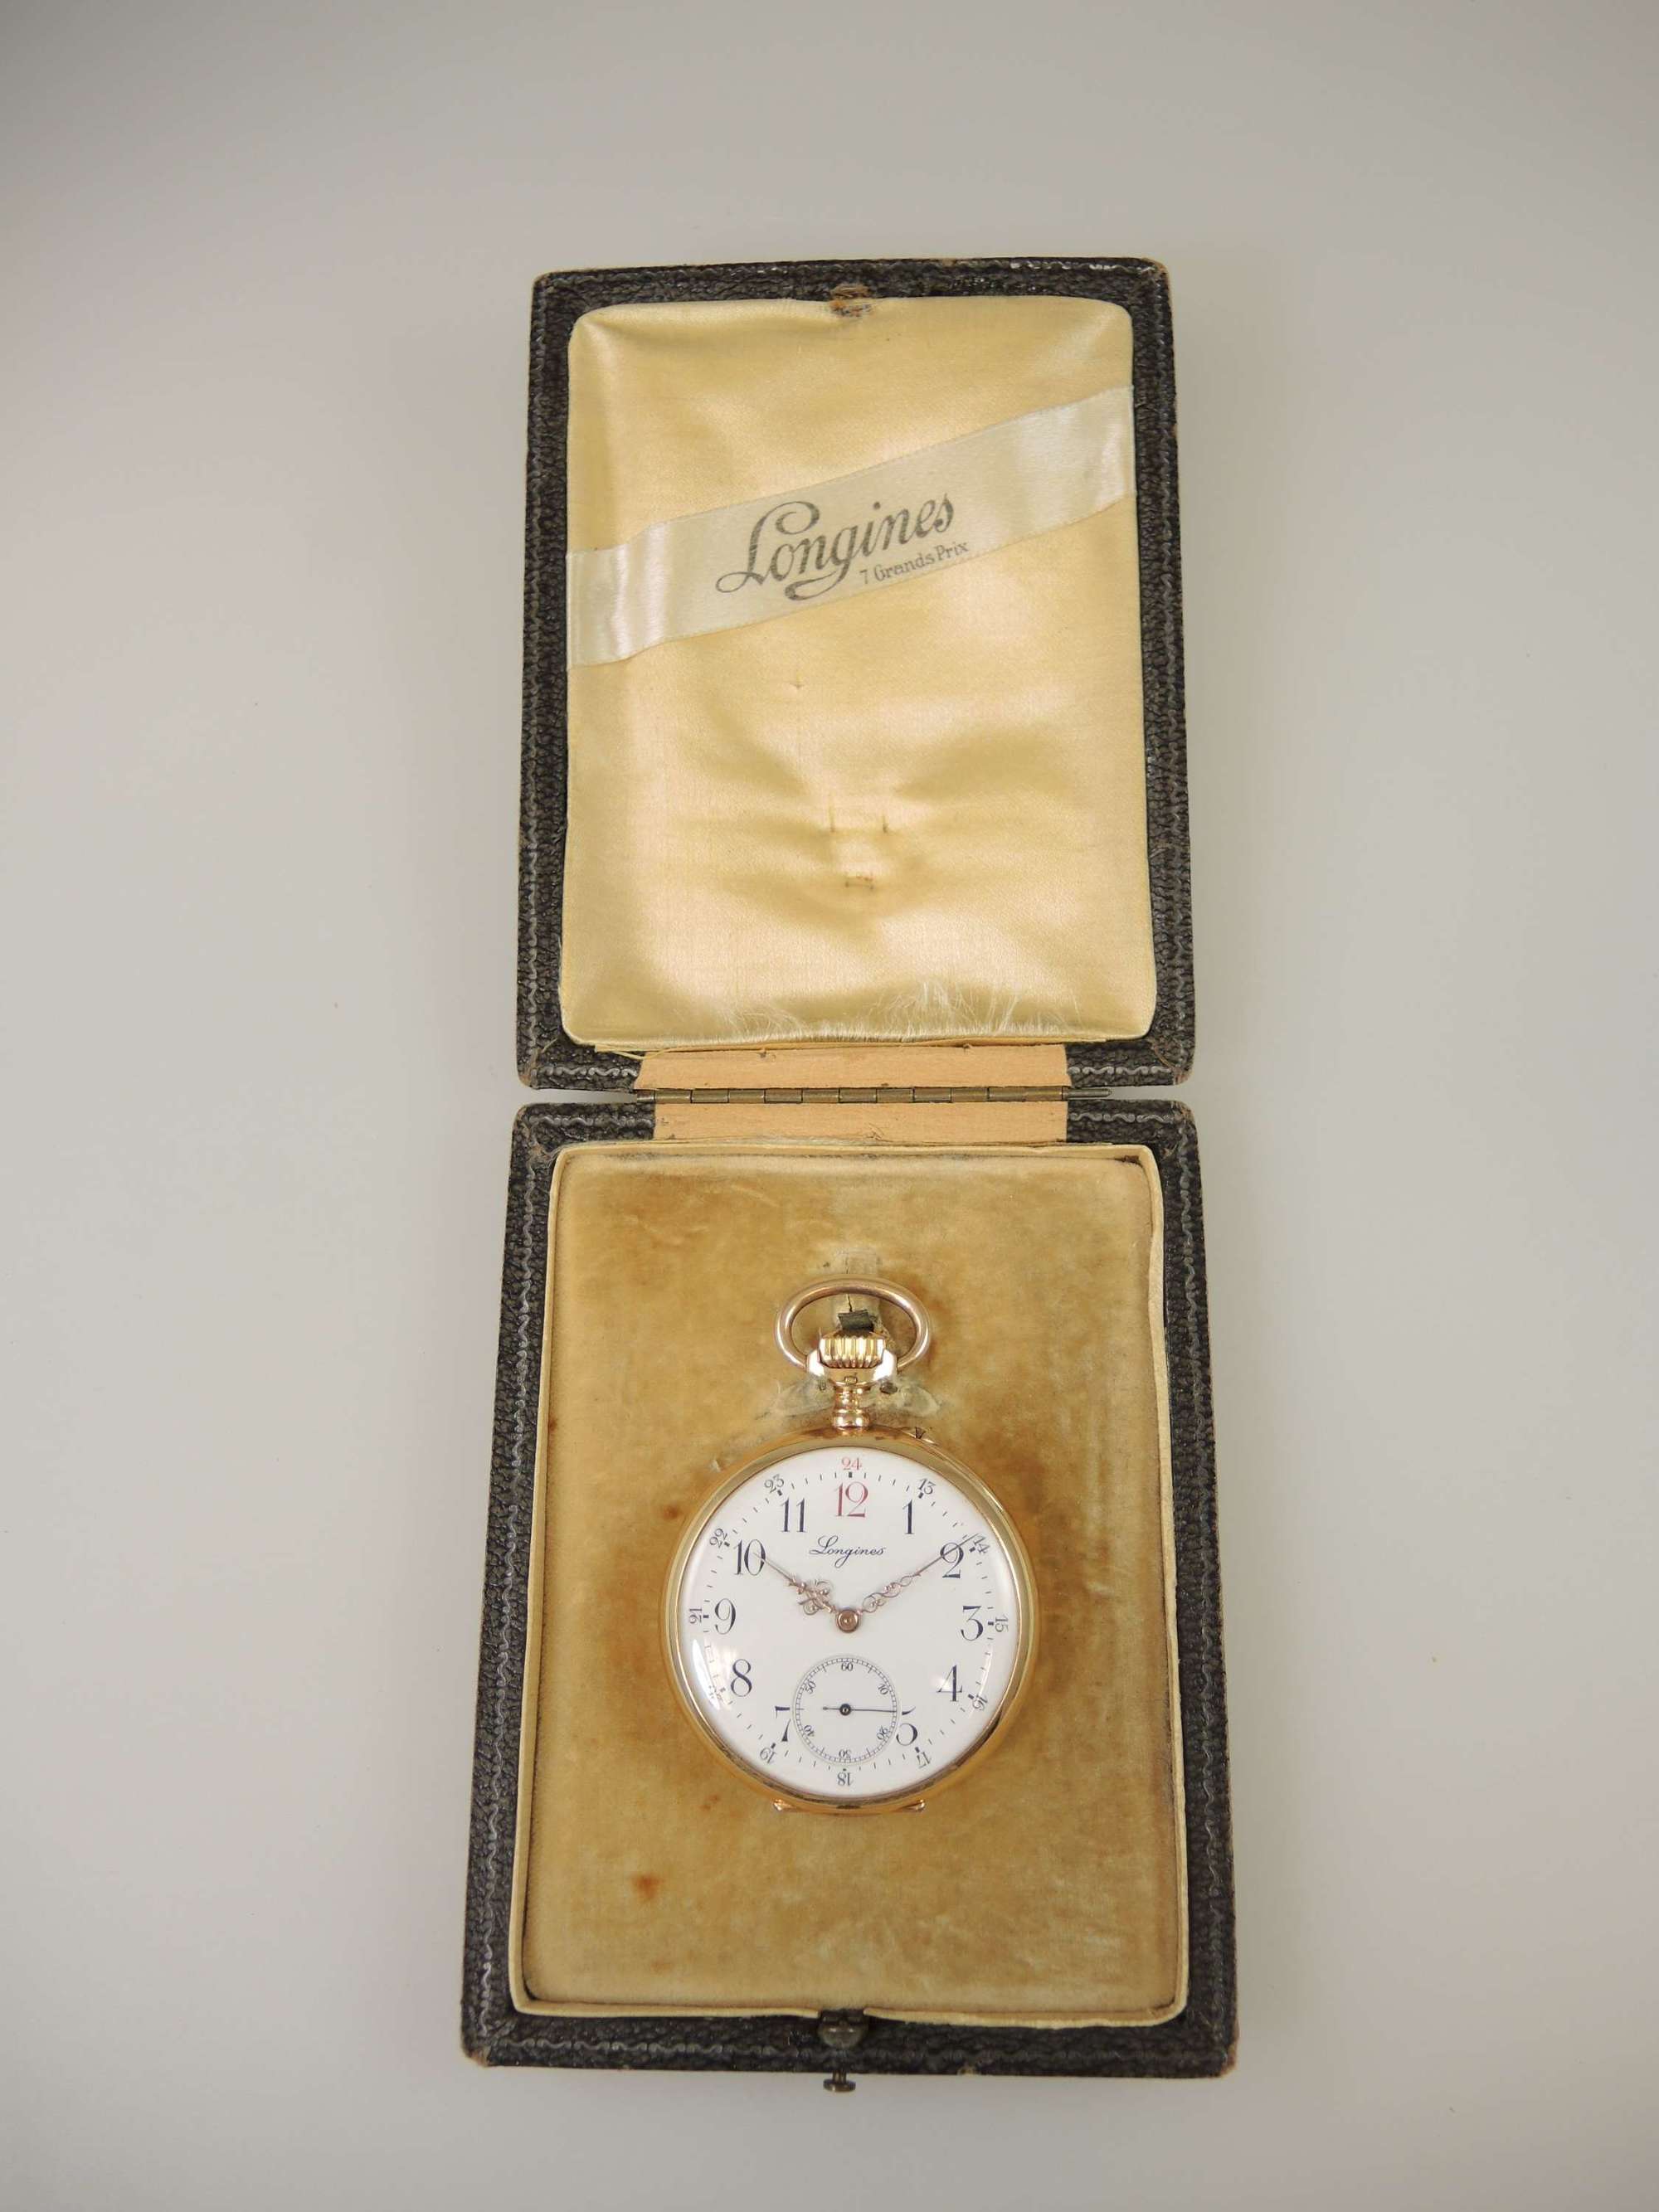 Solid 18K gold Longines pocket watch c1905